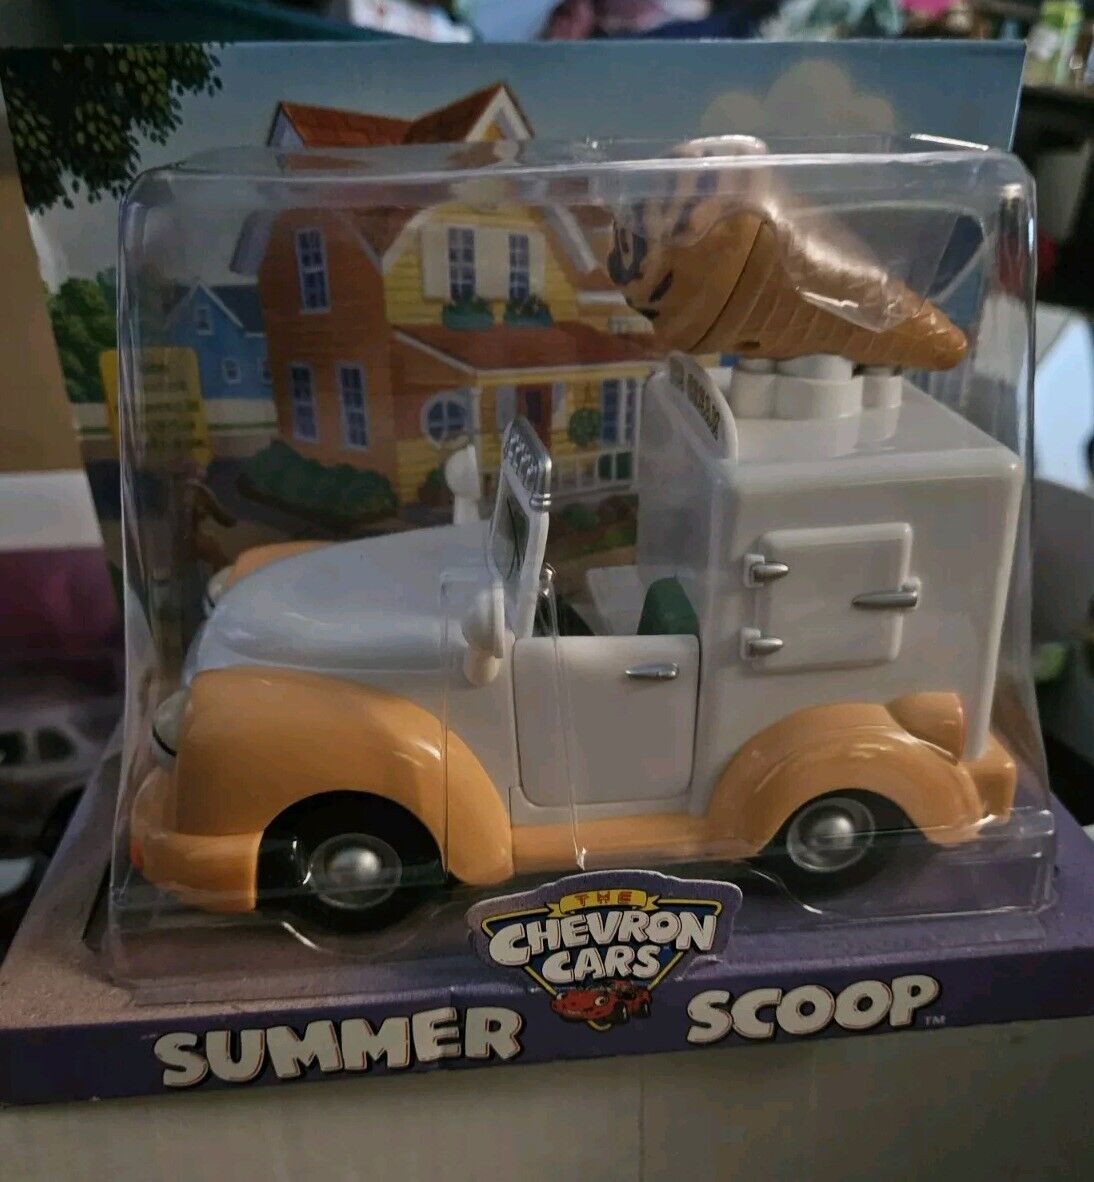 Vtg Chevron Cars Summer Scoop / Ice Cream Cone - Toy Ice Cream Truck